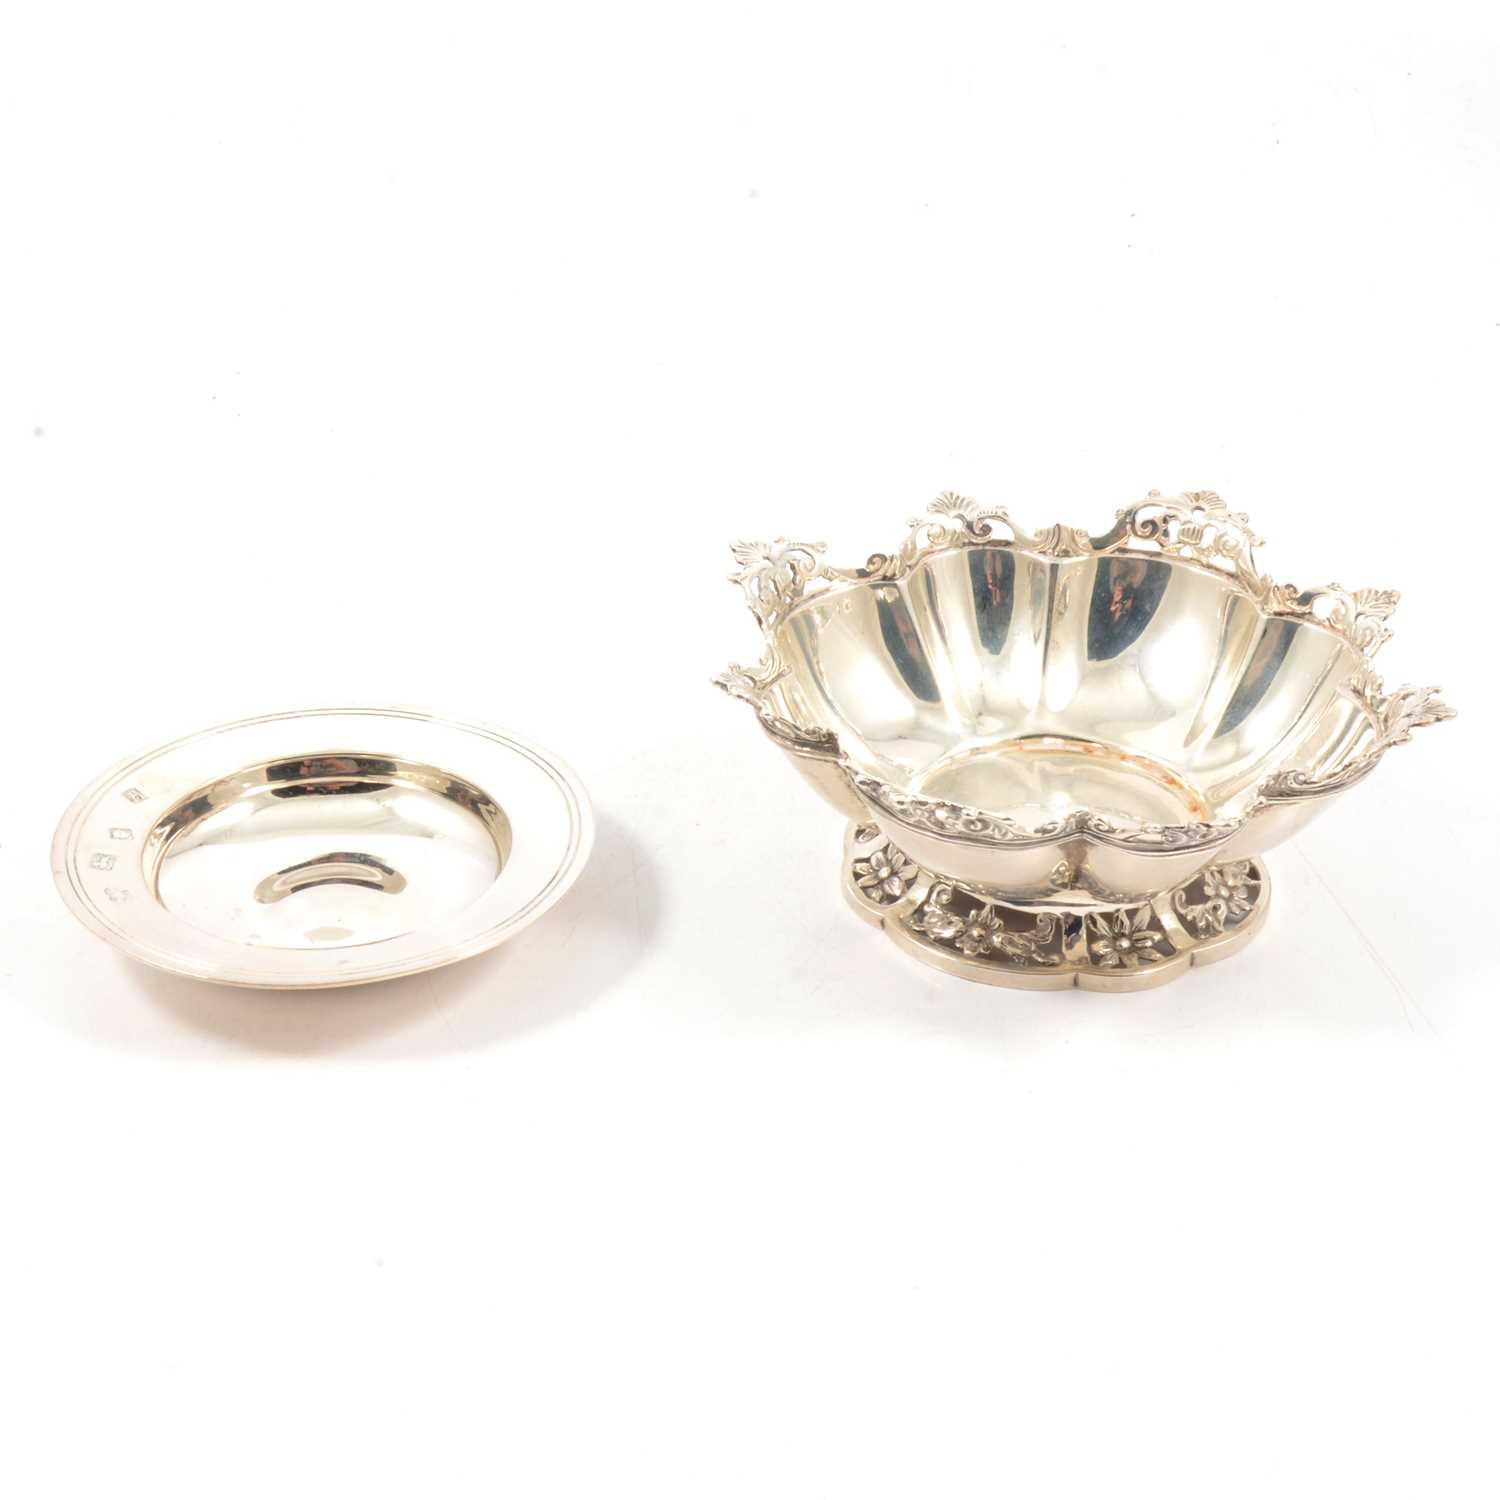 Lot 135 - Edwardian silver sweetmeat bowl, Selfridge & Co Ltd, London 1908, and modern silver armada dish.